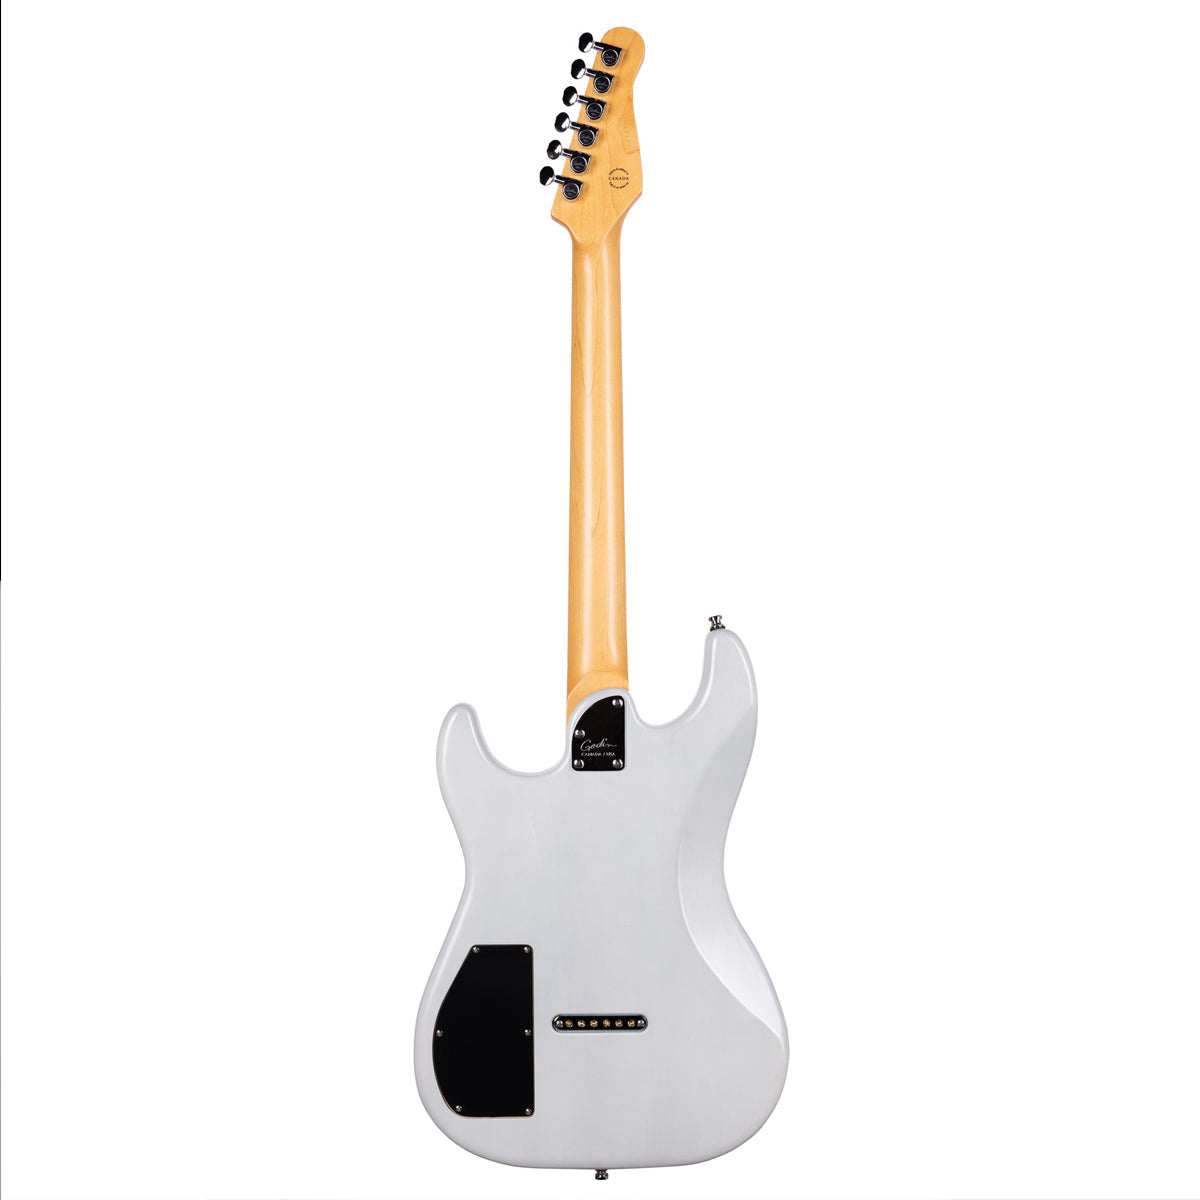 Godin Session RHT Pro Electric Guitar ~ Carbon White, Electric Guitar for sale at Richards Guitars.